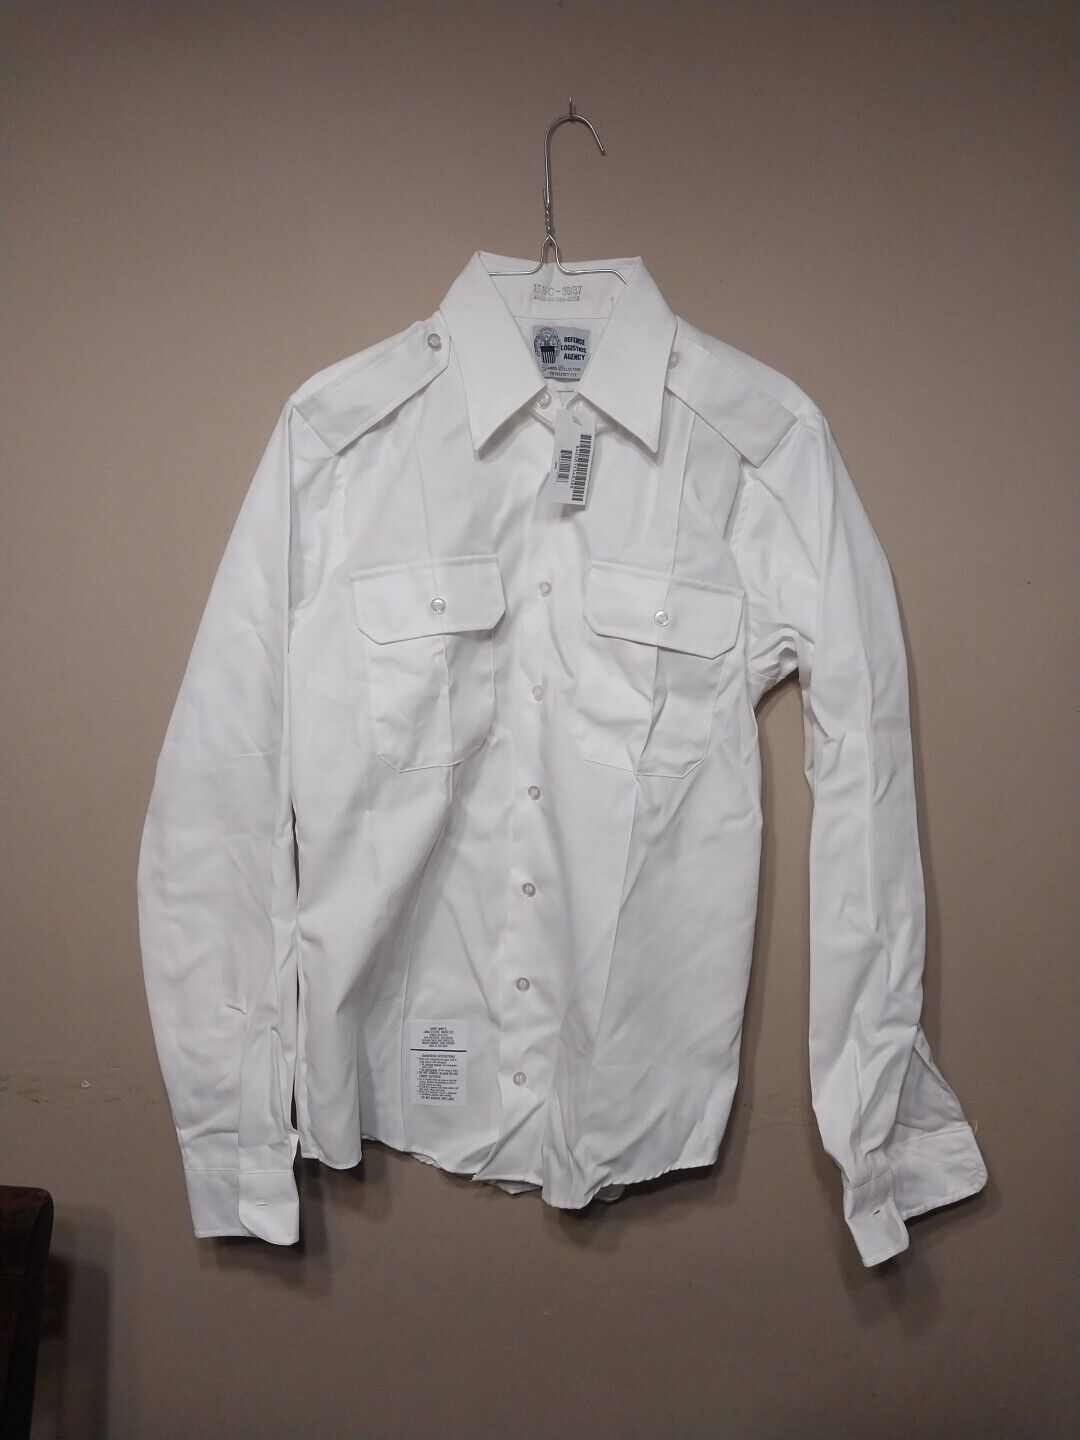 Defense Logistics Agency Long Sleeve White Uniform Shirt 15.5C